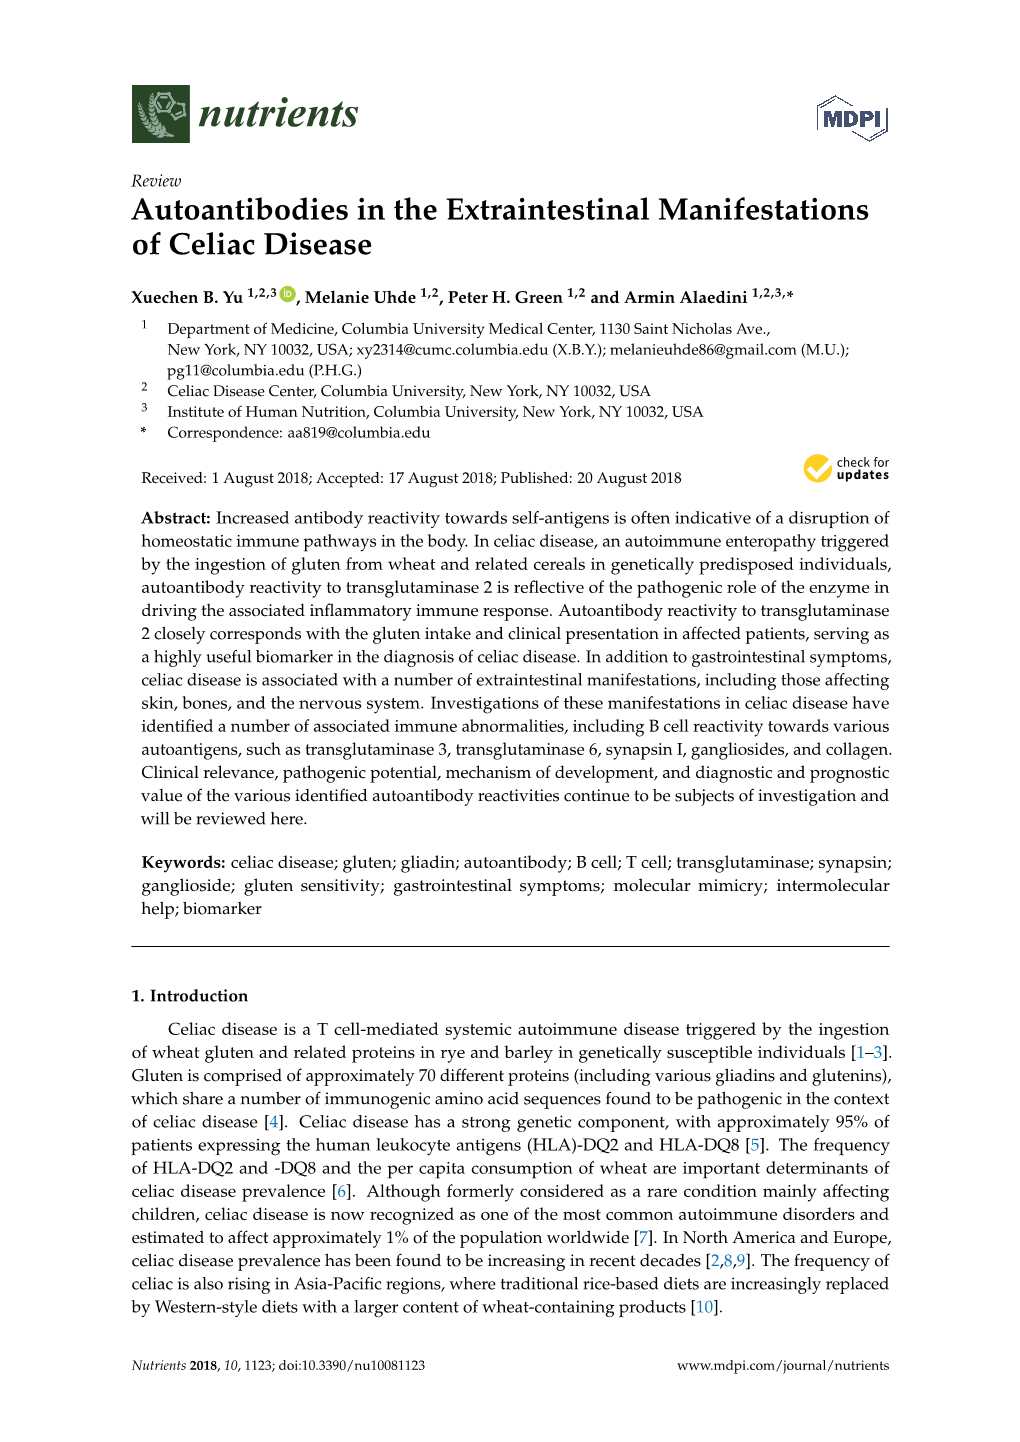 Autoantibodies in the Extraintestinal Manifestations of Celiac Disease